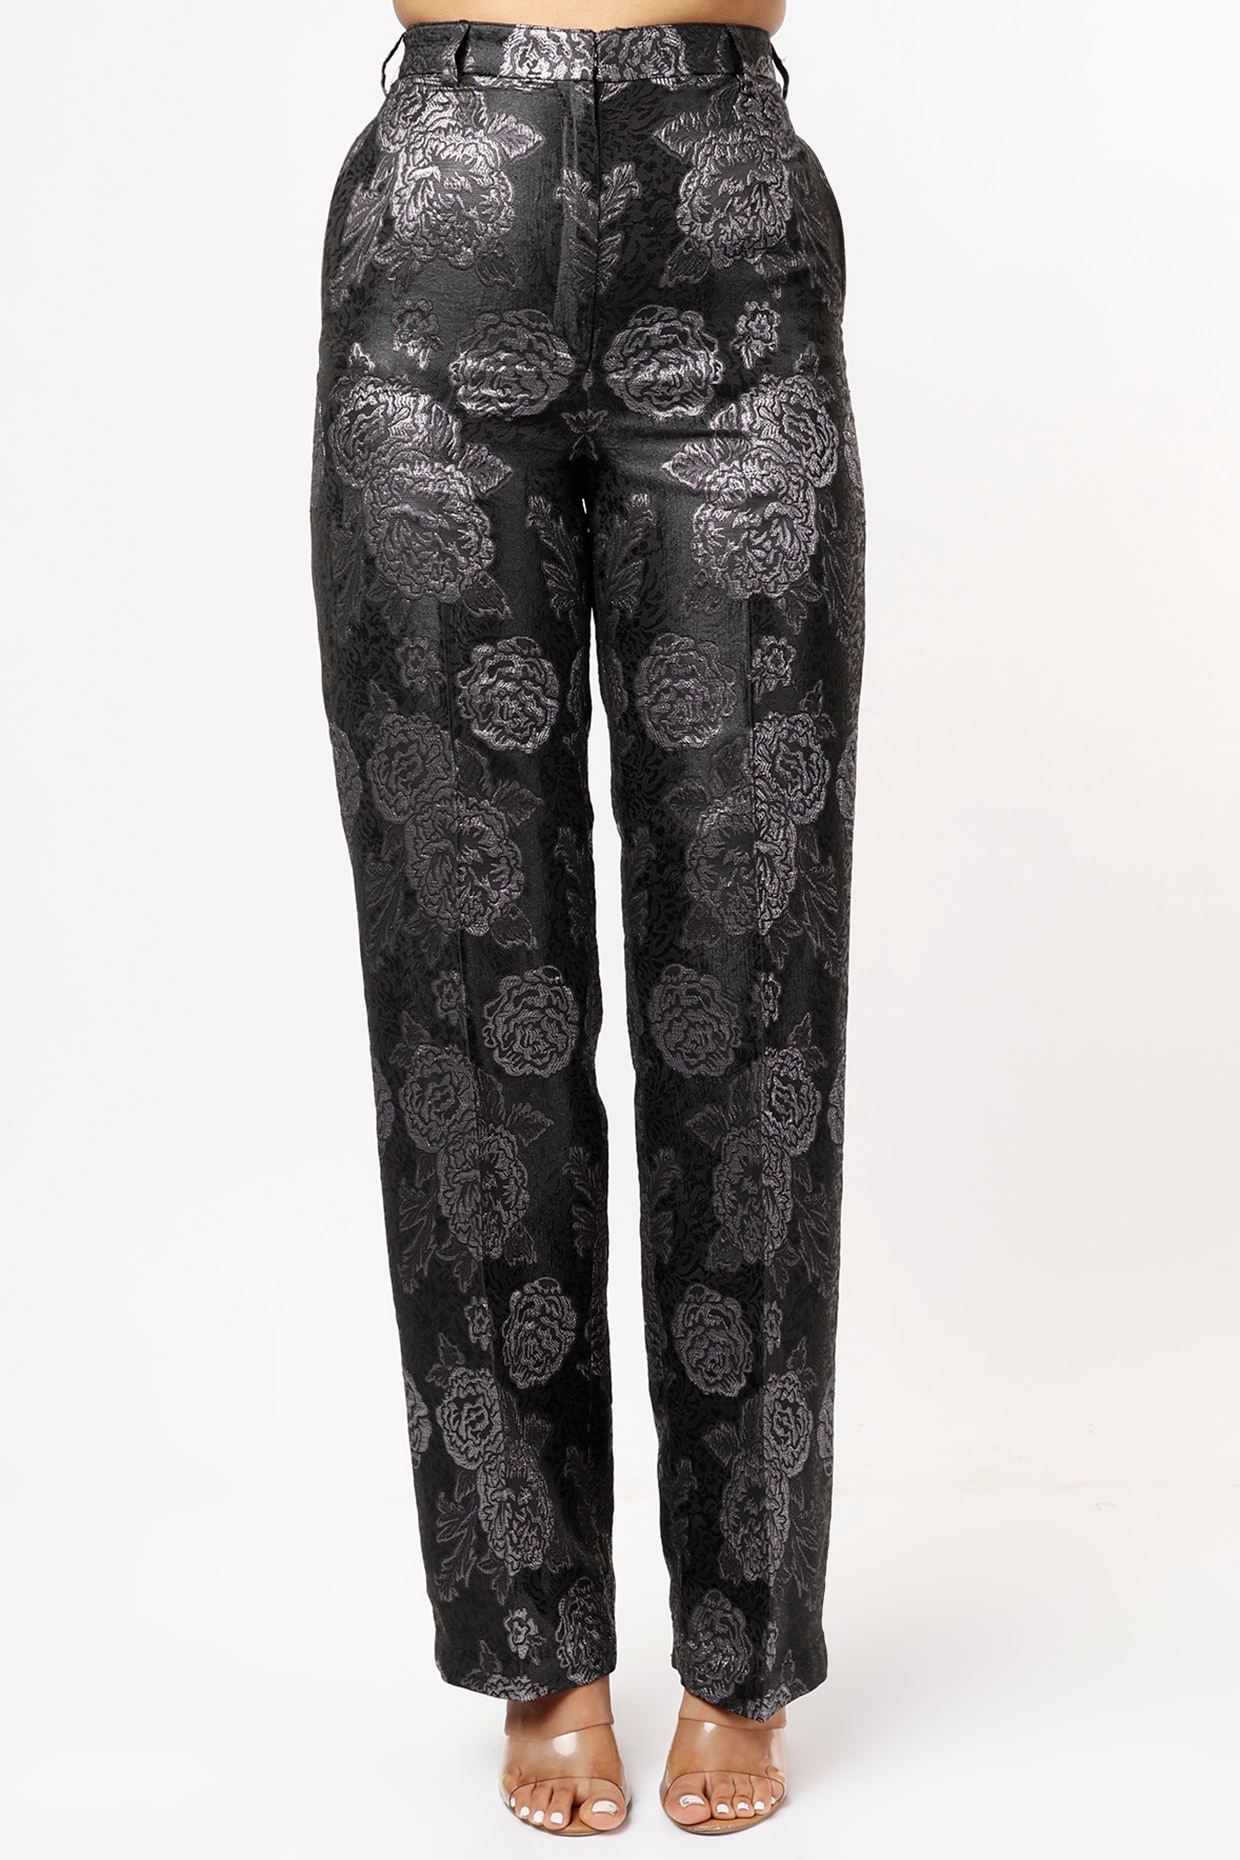 Prime Quality Men's Trousers Pants Black Brocade Steampunk VTG Vintage  Gothic EMO Victorian - Etsy Denmark